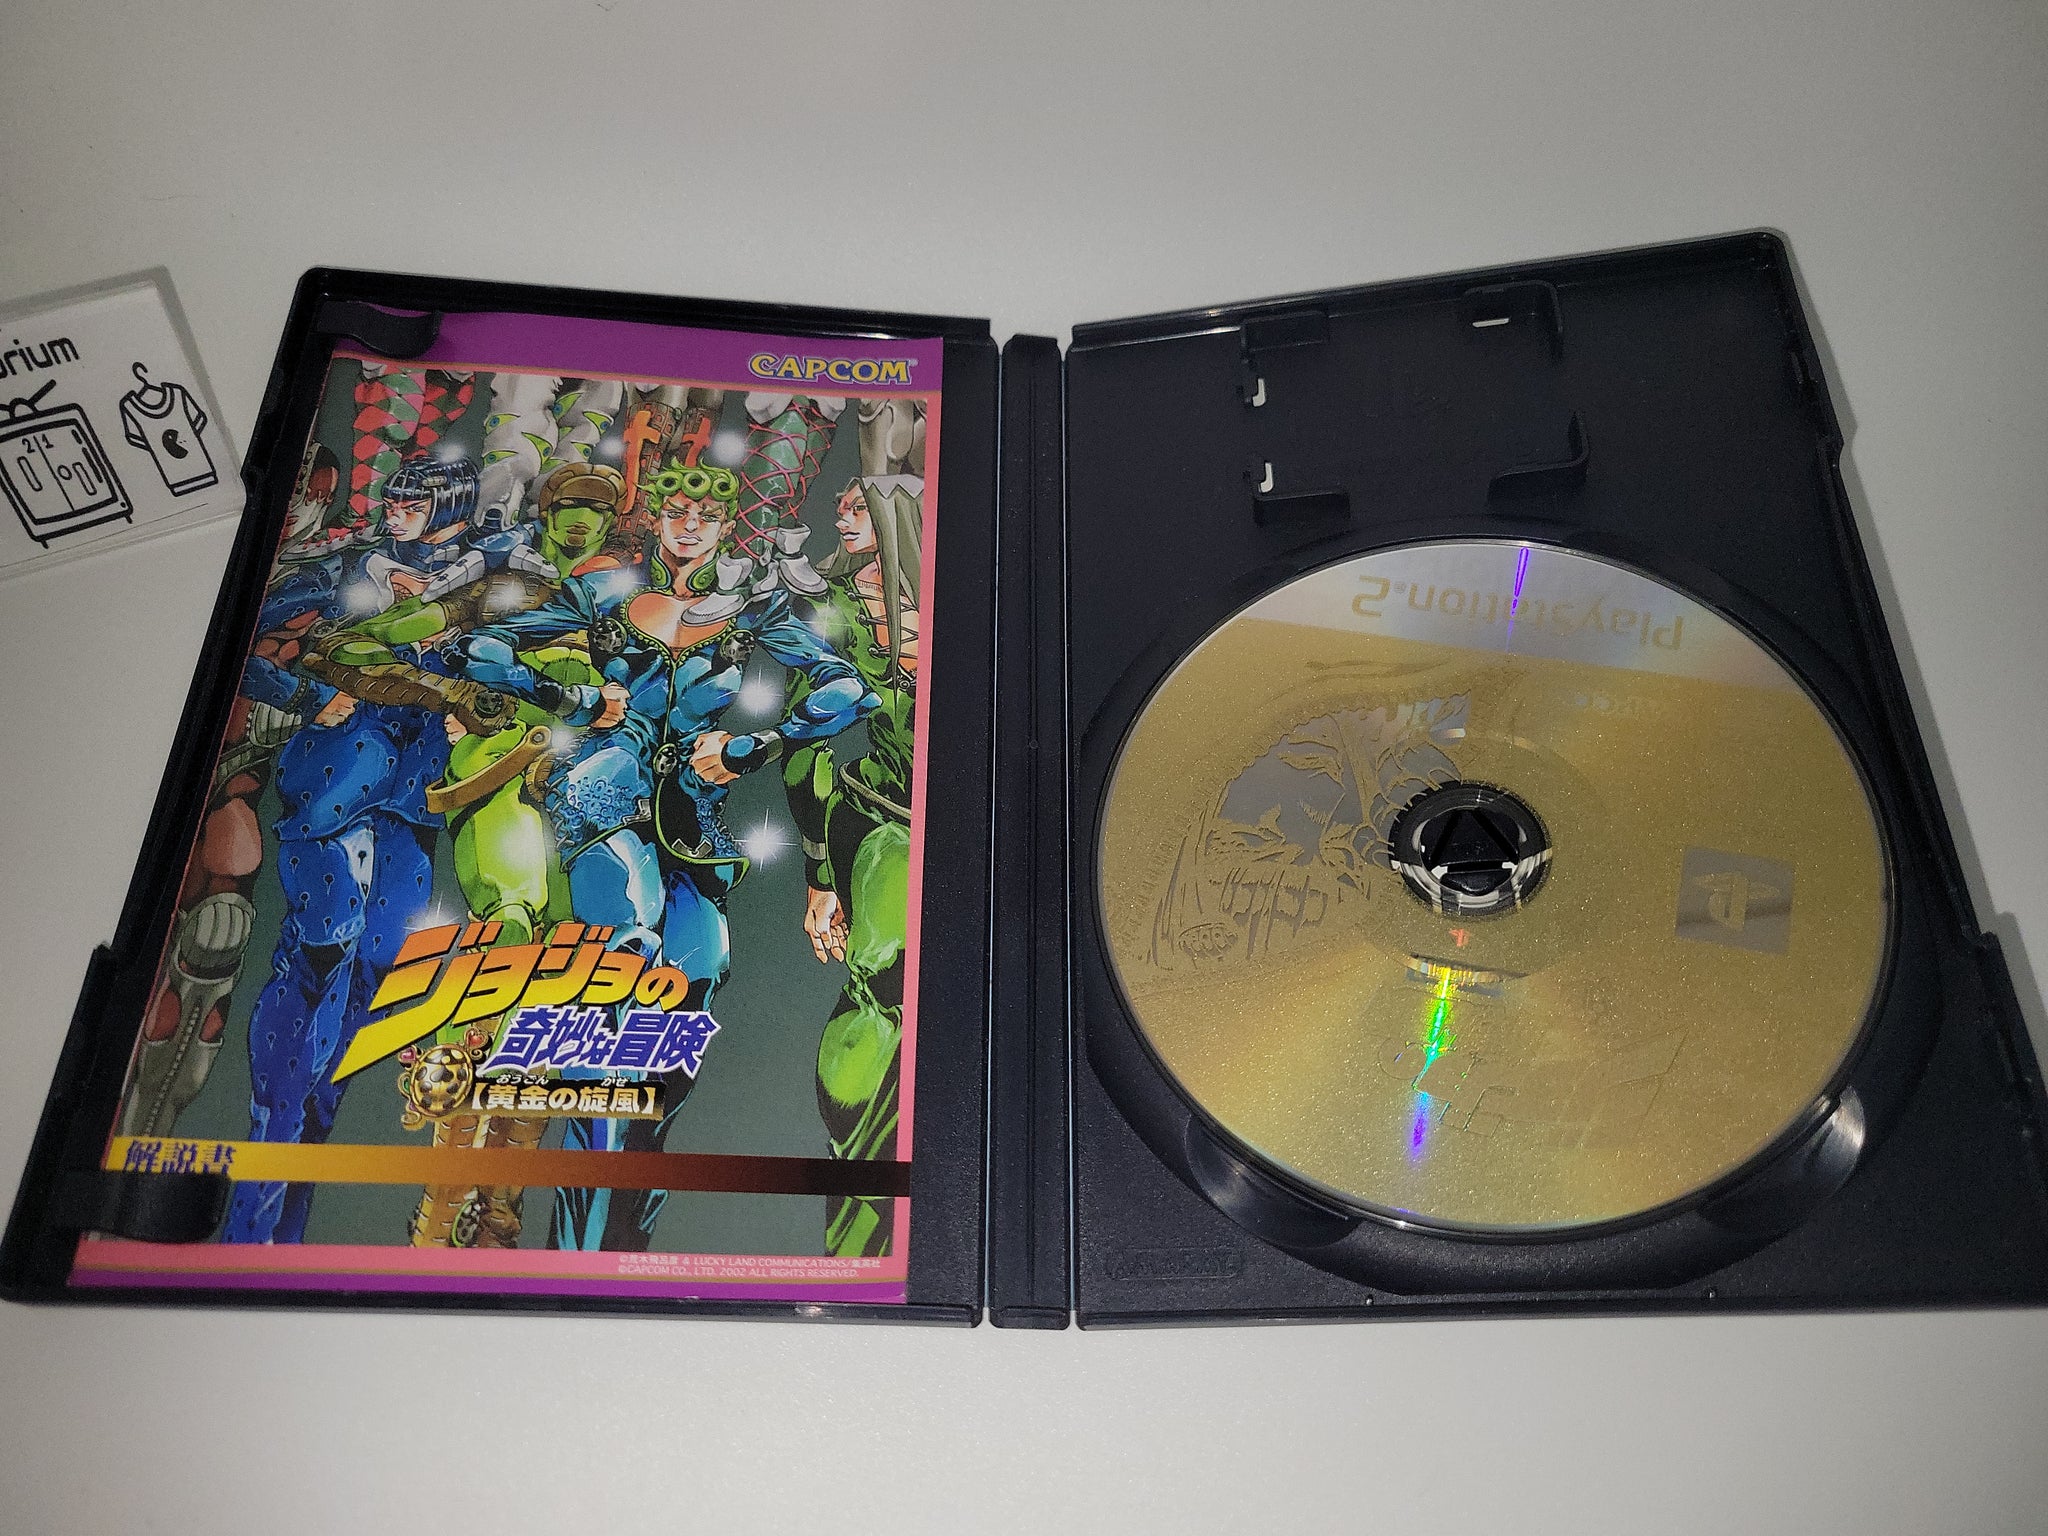 Buy JoJo's Bizarre Adventure: Phantom Blood PS2 CD! Cheap game